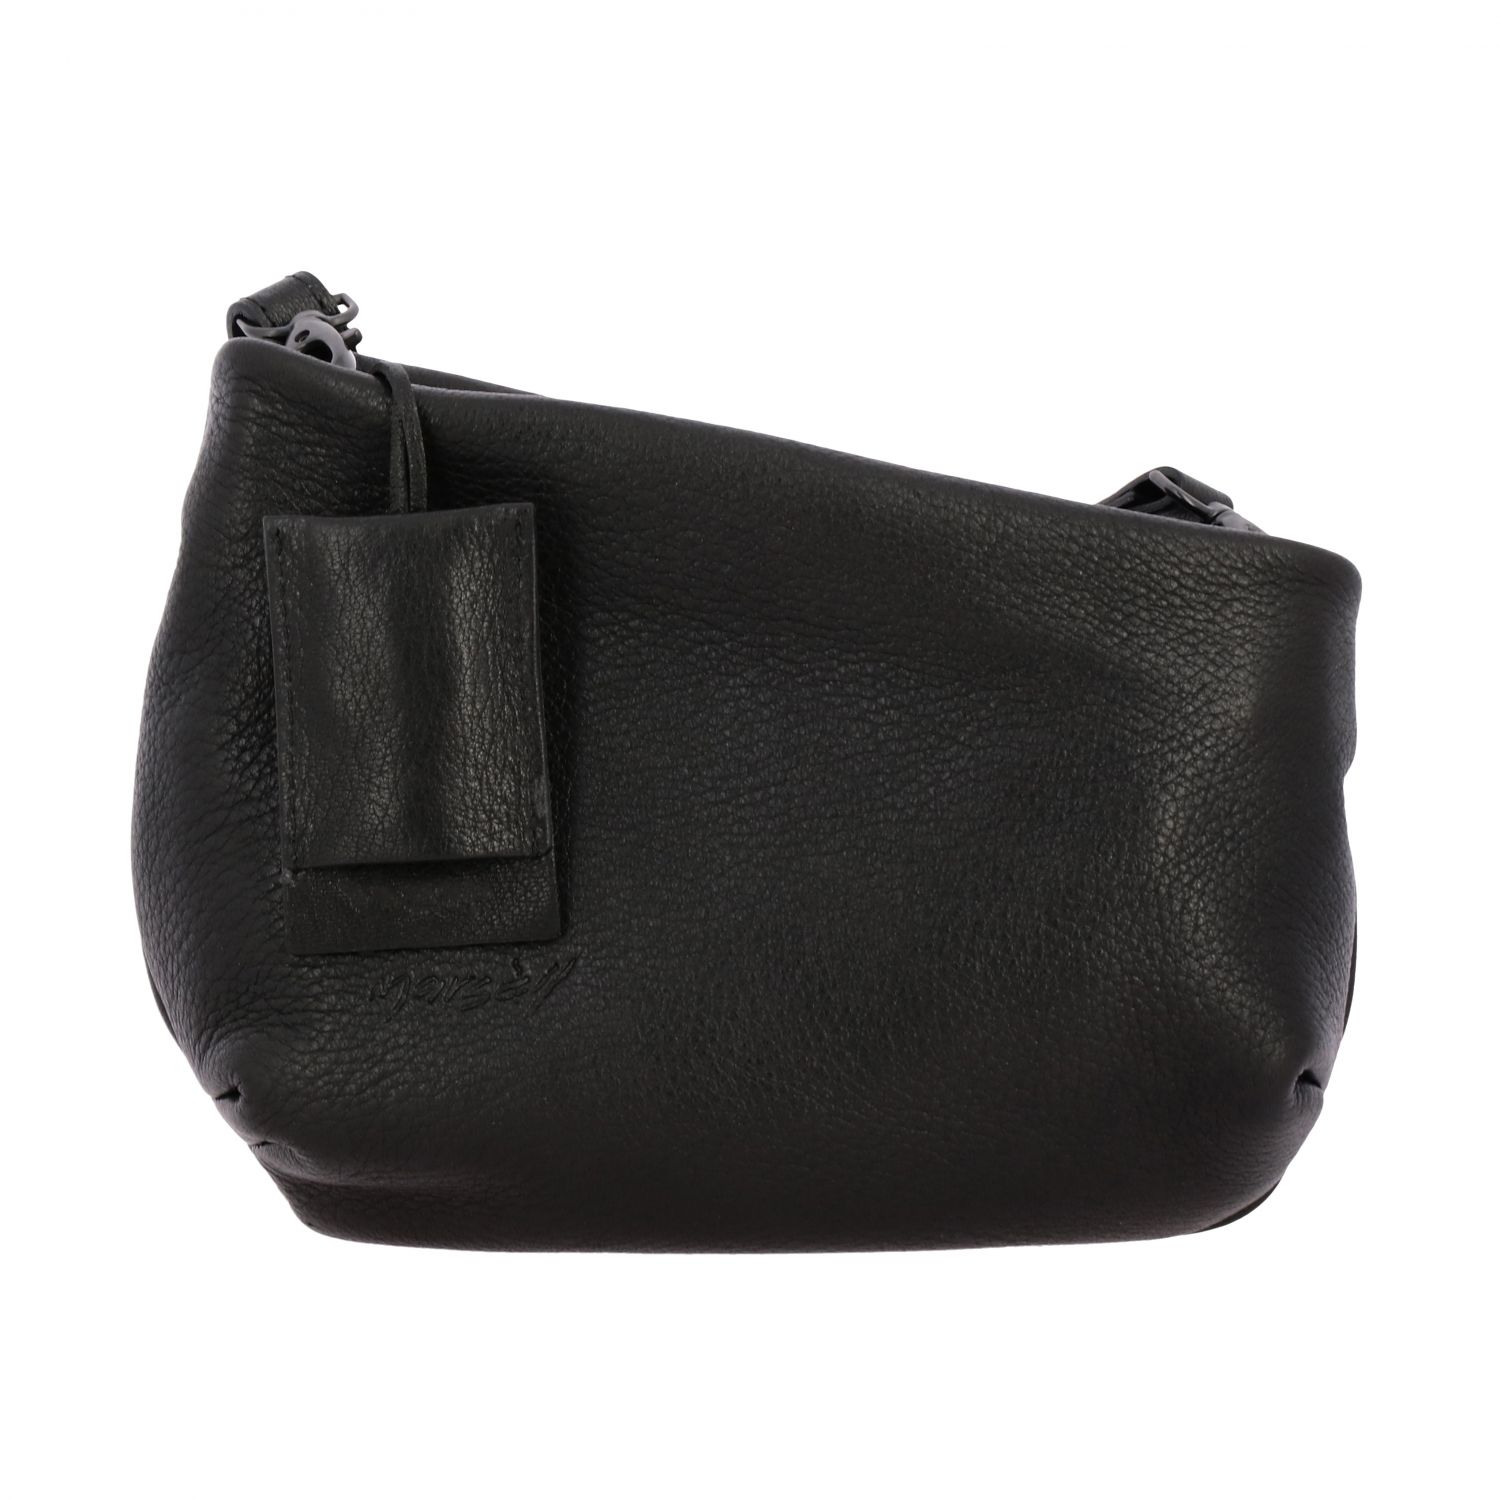 MARSÈLL: Fantasmino shoulder bag in deer leather - Black | Marsèll mini ...